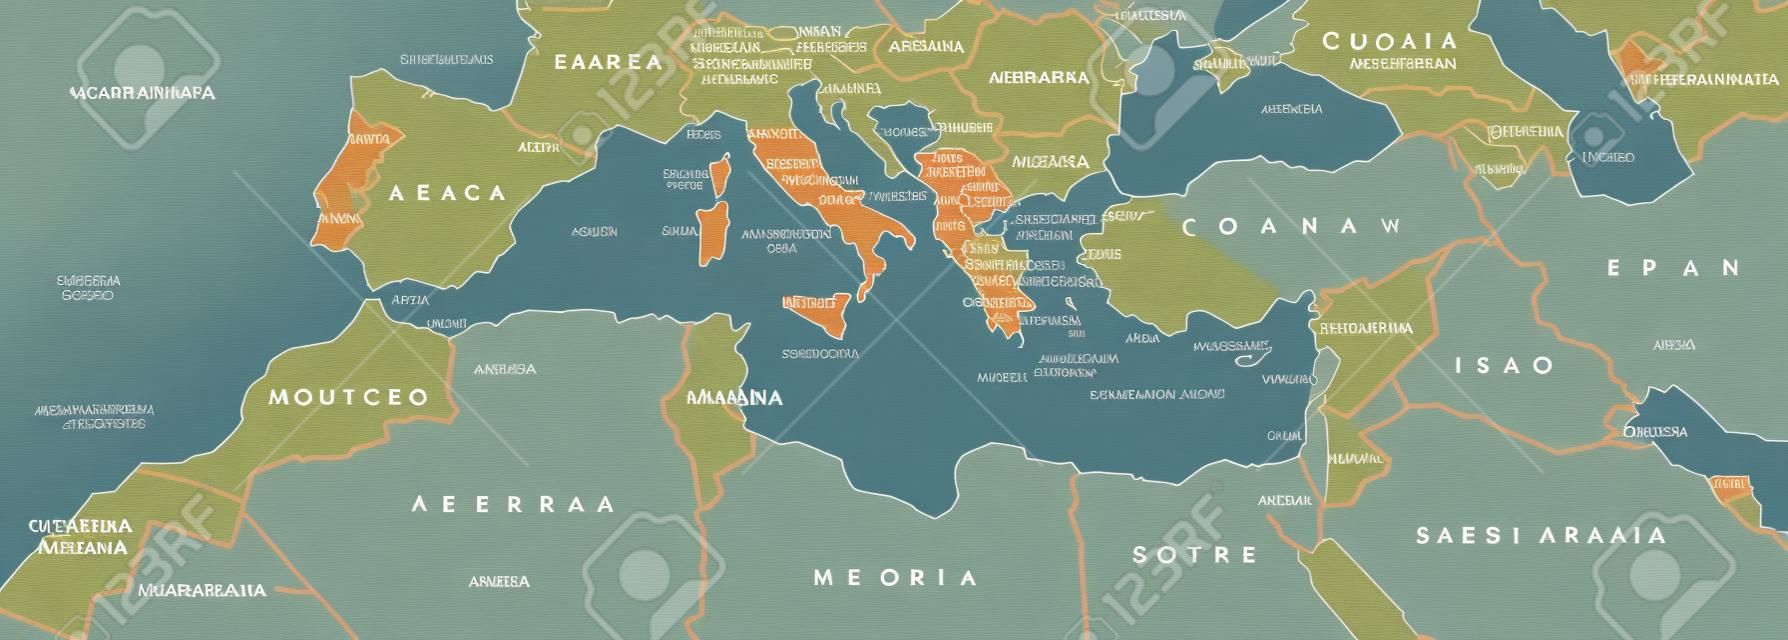 Mediterranean Basin political map. Mediterranean region, also Mediterranea. Lands around Mediterranean Sea. South Europe, North Africa and Near East. Gray illustration with English labeling. Vector.